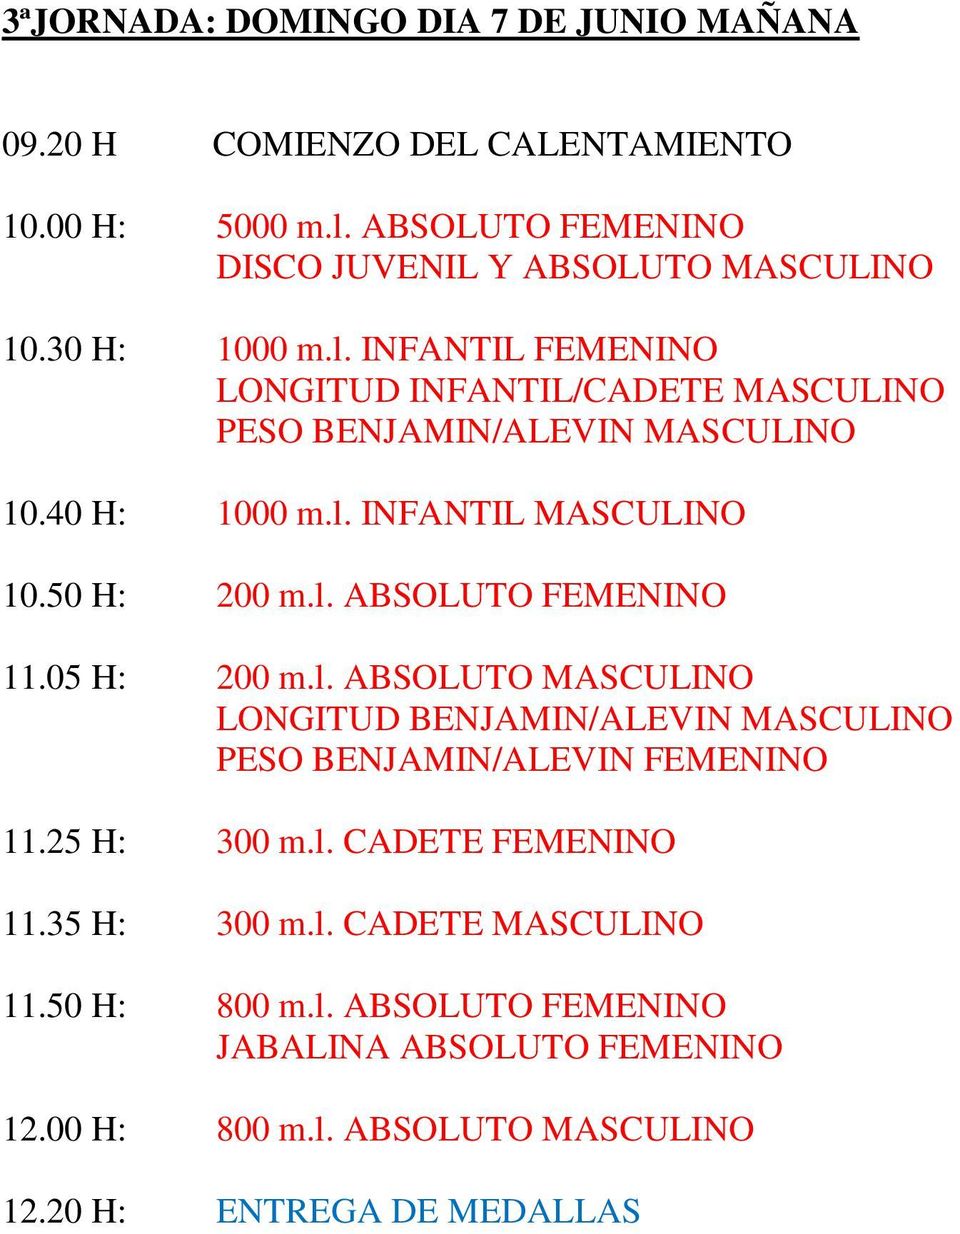 05 H: 200 m.l. ABSOLUTO MASCULINO LONGITUD BENJAMIN/ALEVIN MASCULINO PESO BENJAMIN/ALEVIN FEMENINO 11.25 H: 300 m.l. CADETE FEMENINO 11.35 H: 300 m.l. CADETE MASCULINO 11.